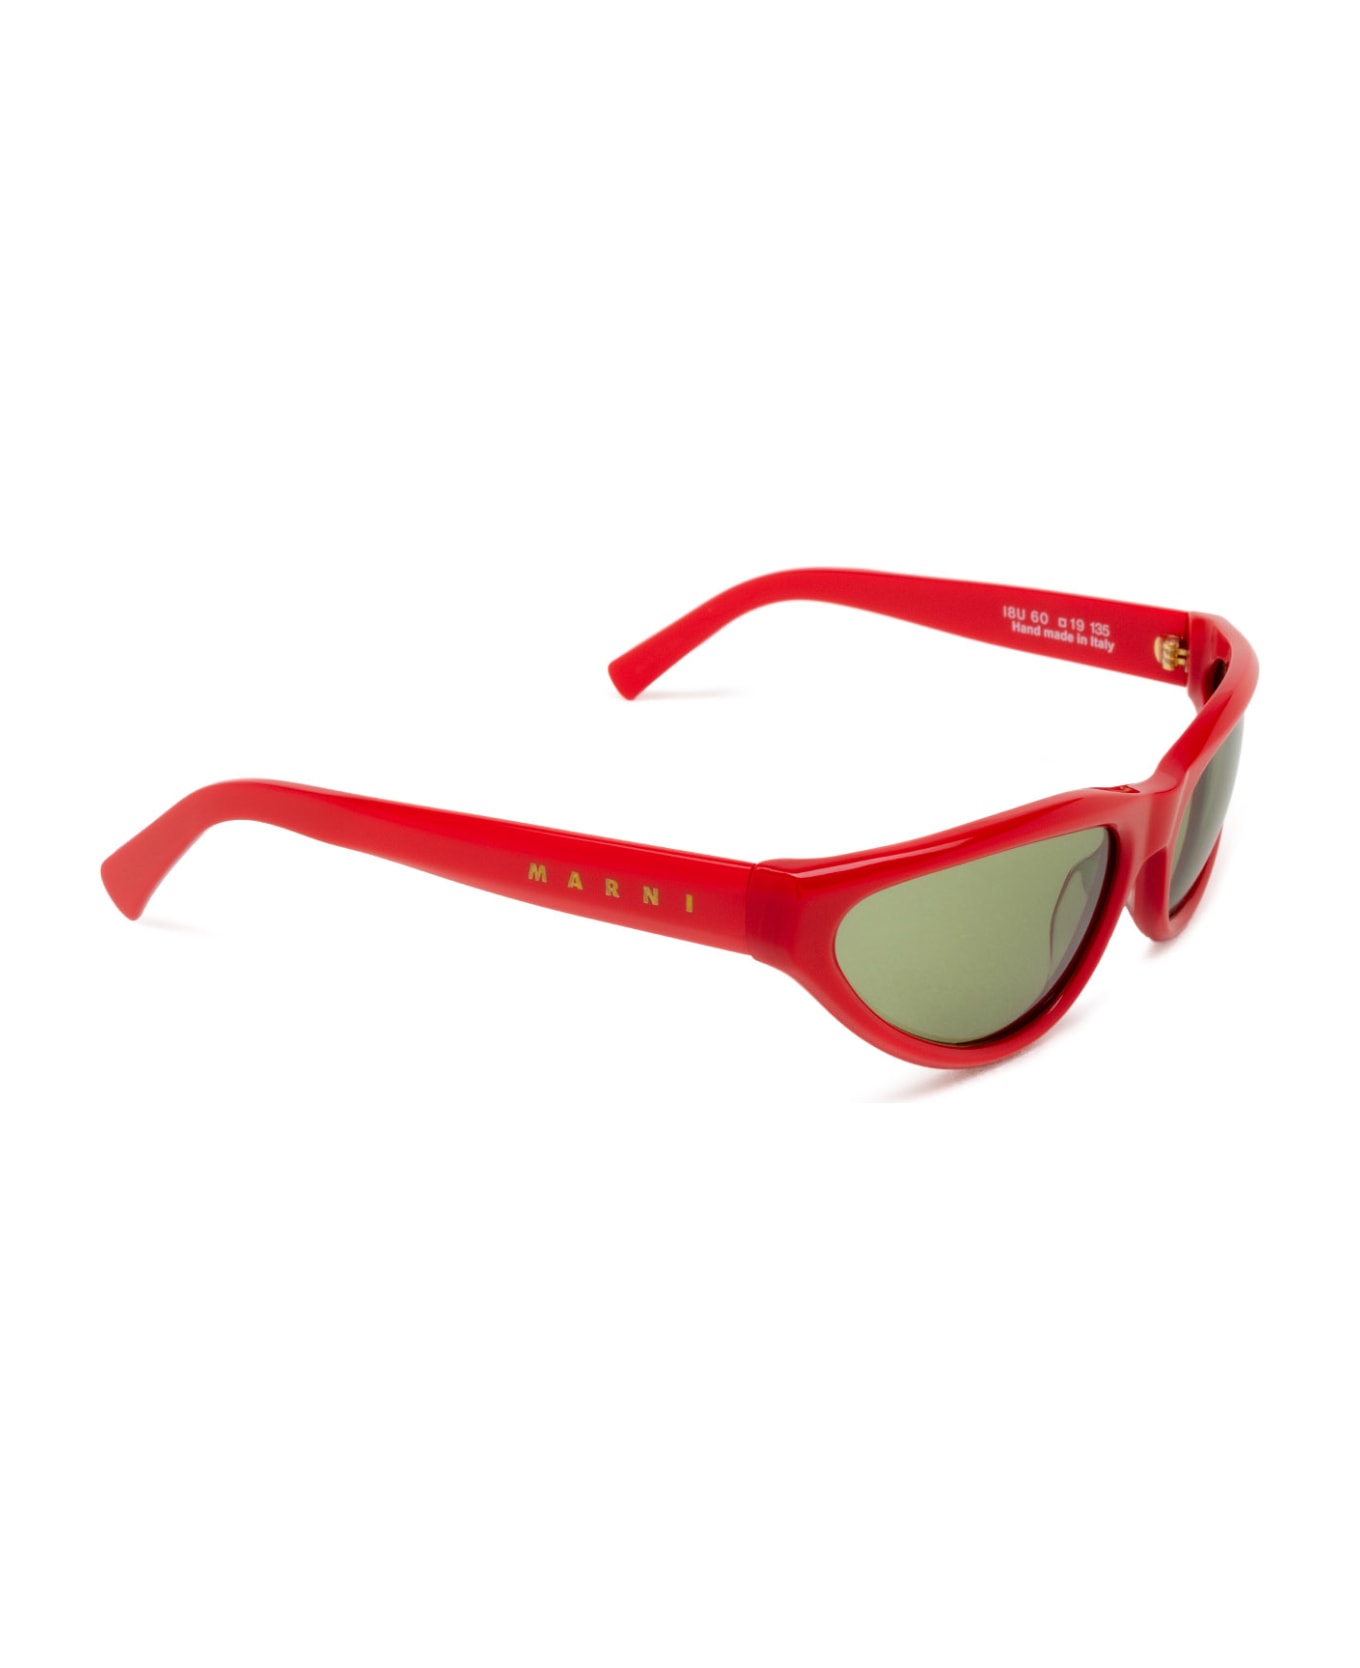 Marni Eyewear Mavericks Solid Red Sunglasses - Solid Red